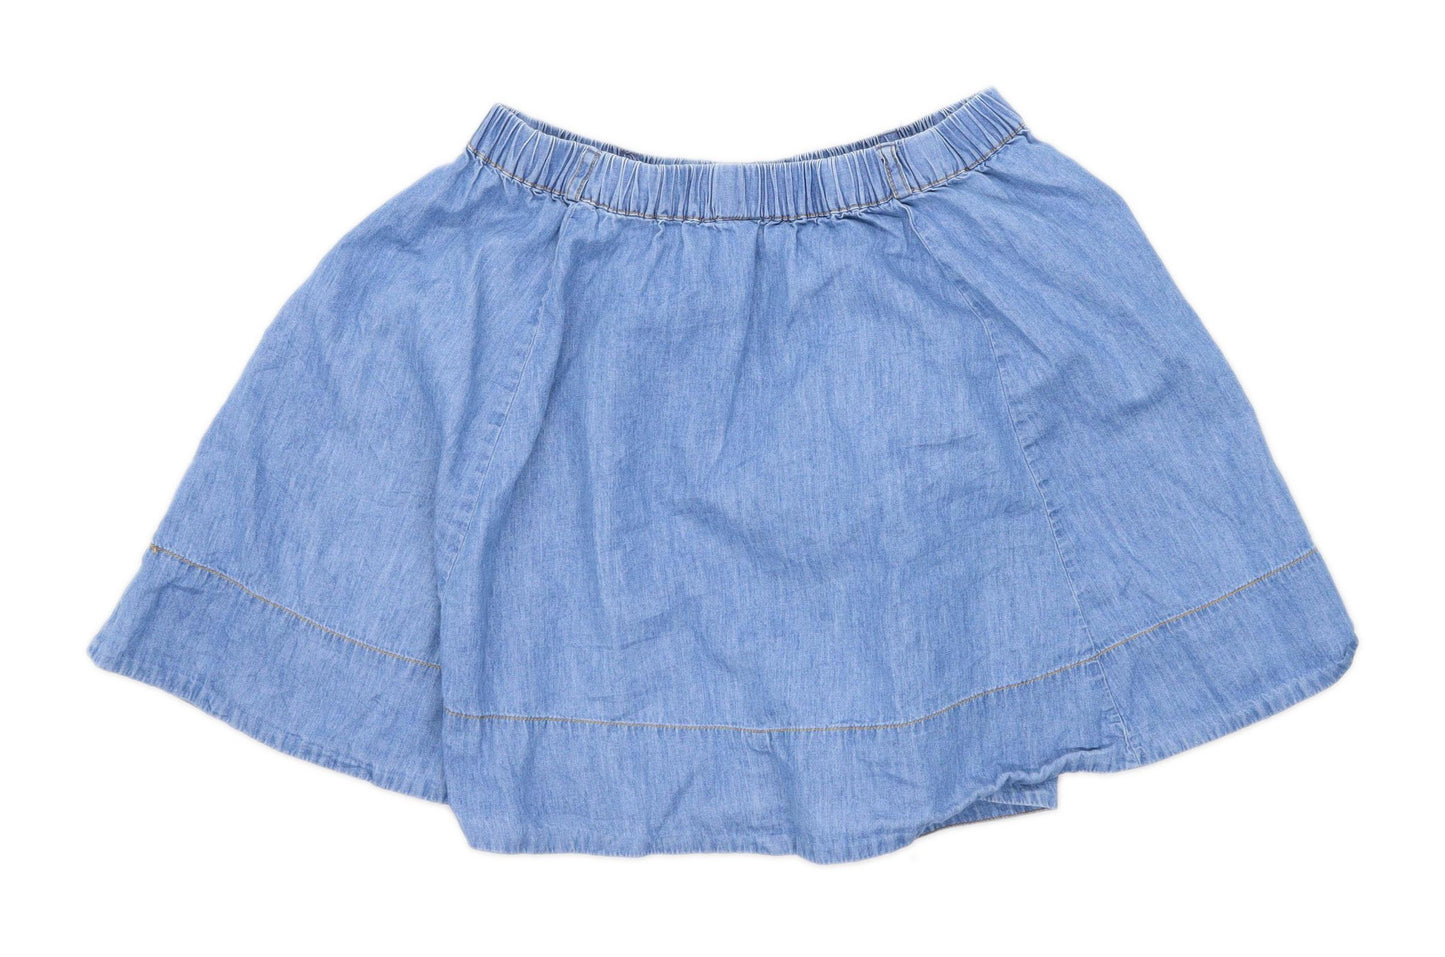 Atmosphere Womens Size 8 Cotton Blue Skirt (Regular)